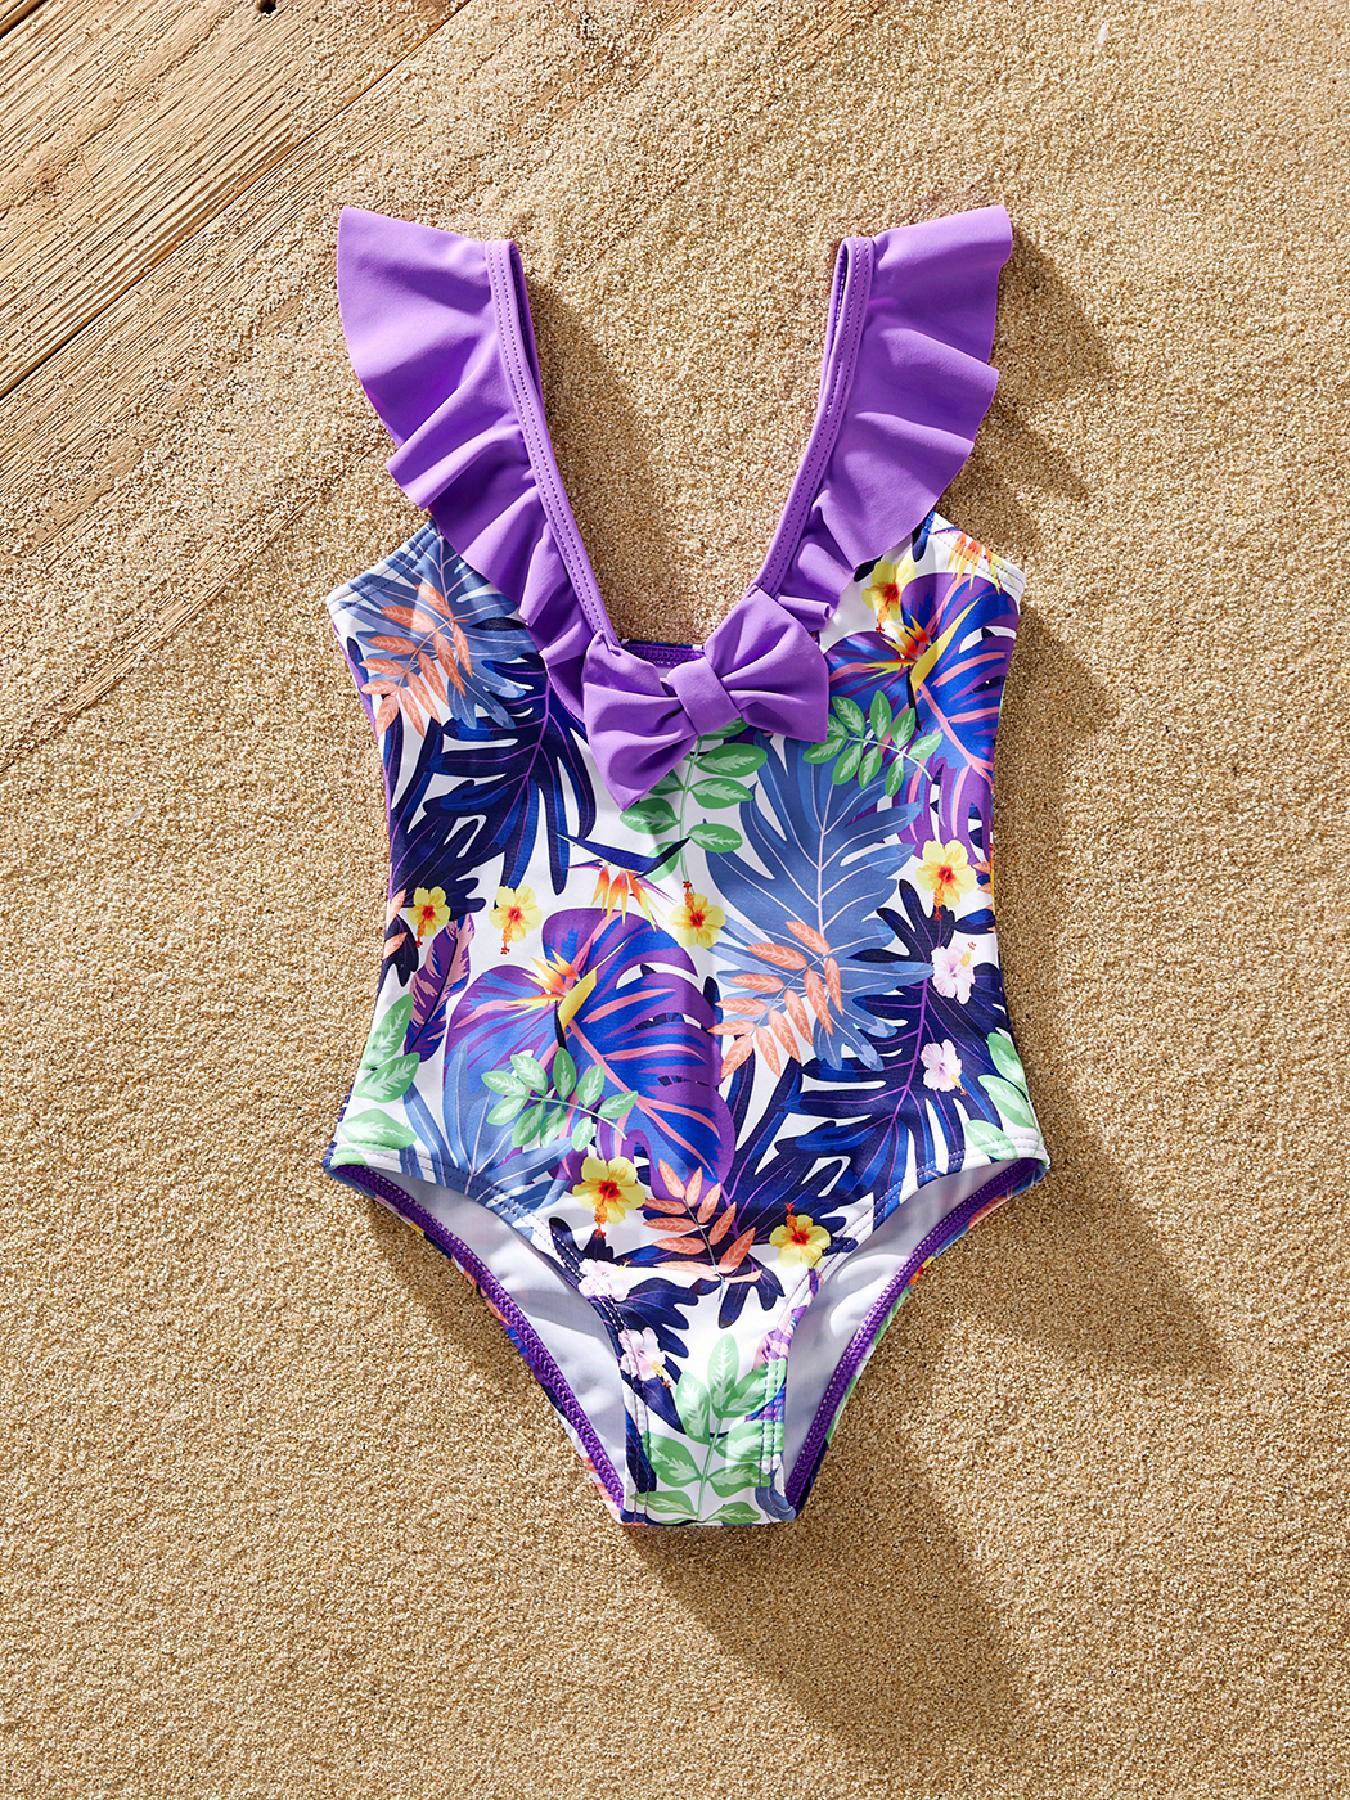 PatPat Family Matching Swimsuit,Leave Print Female Monokini